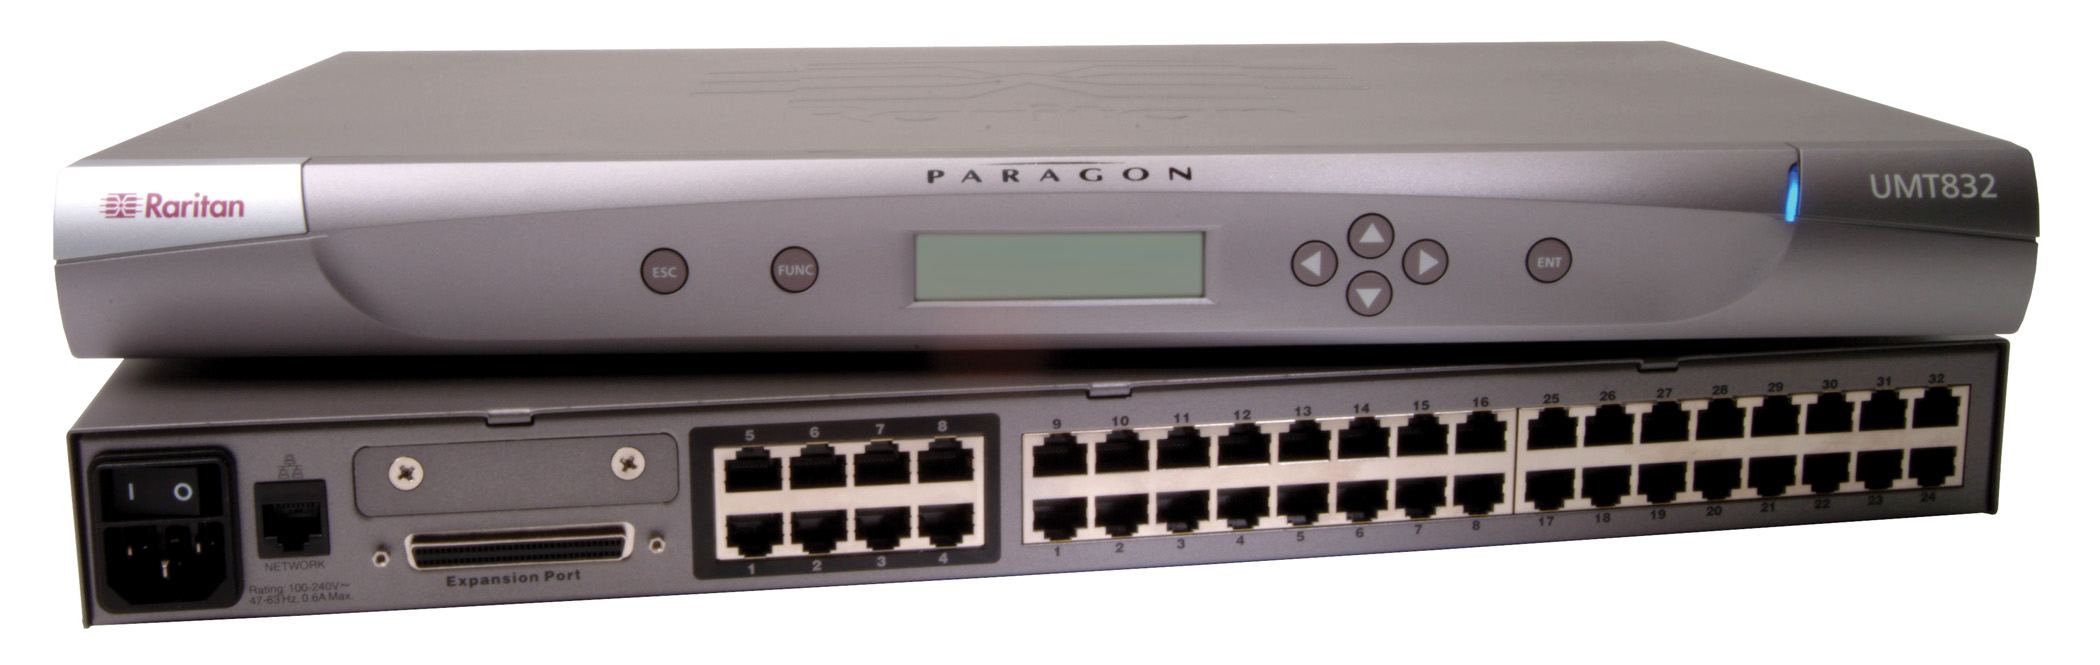 Raritan Paragon II P2-UMT832 8 User 32 Port KVM Switch